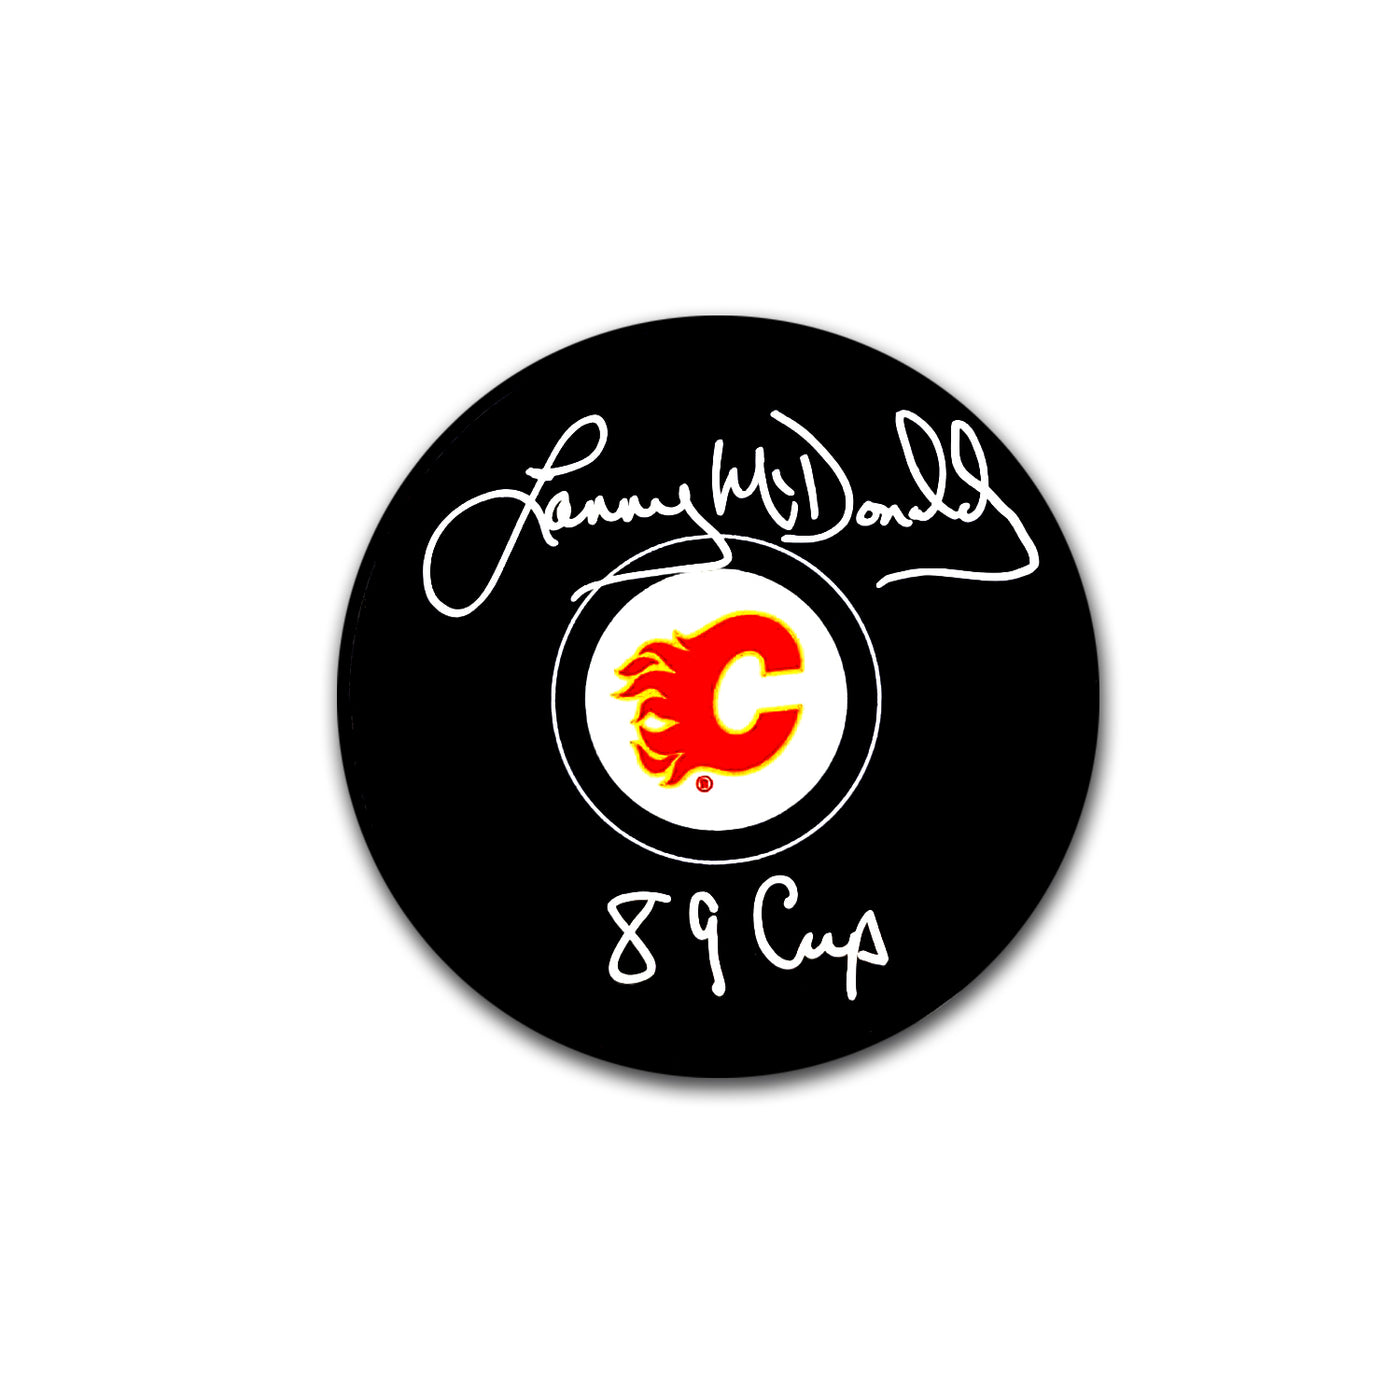 Lanny McDonald Calgary Flames Autographed Hockey Puck Inscribed 89 Cup